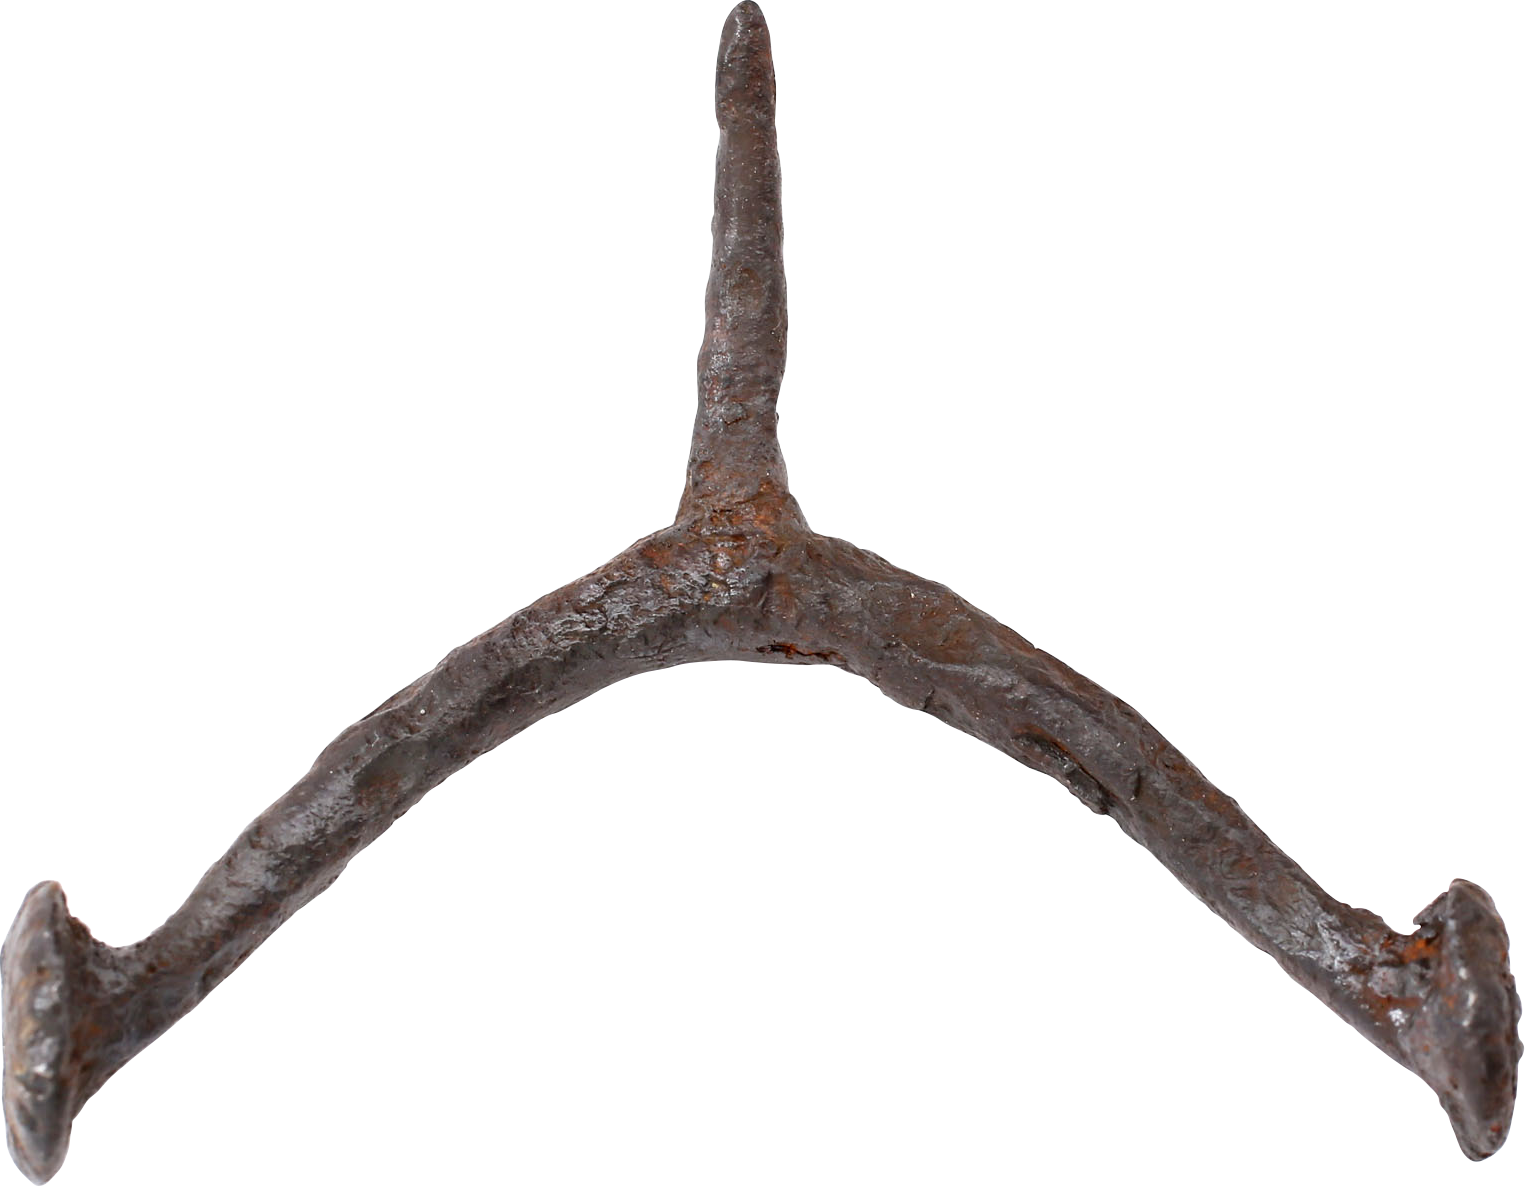 CELTIC IRON SPUR C.300 BC-100 AD - Fagan Arms